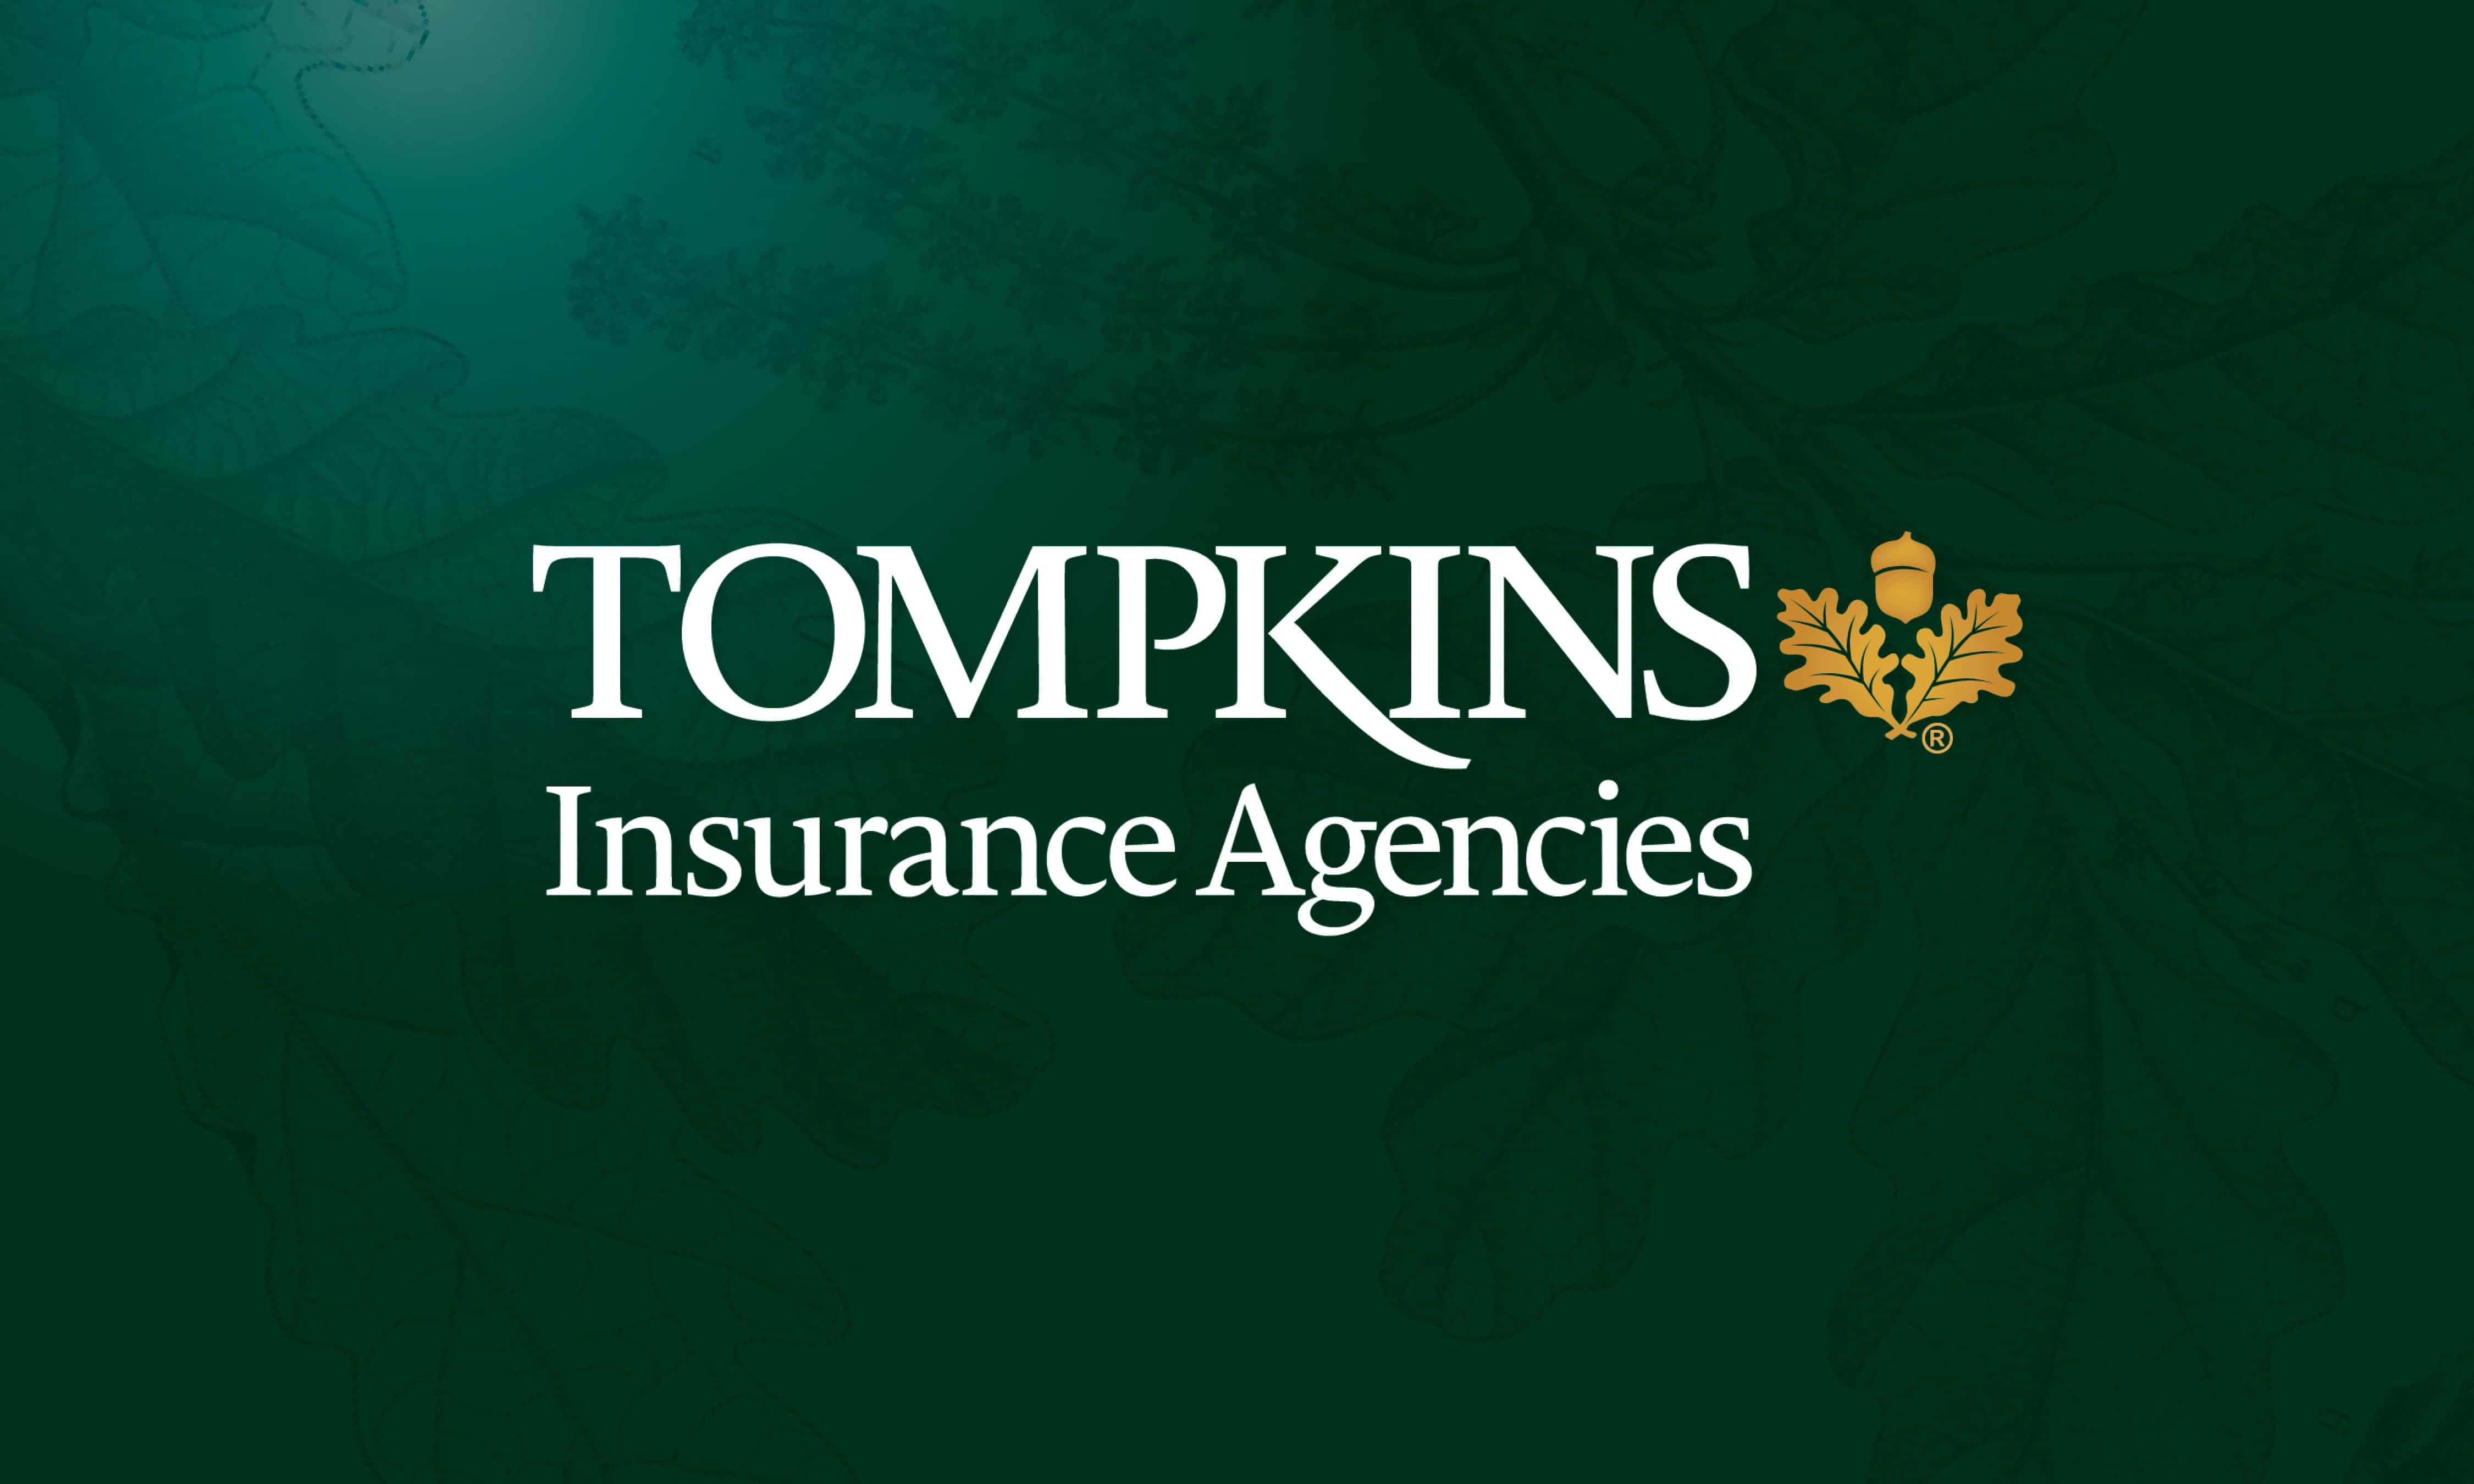 Tompkins Insurance Agencies Continues to Grow in Buffalo, Welcomes Kathleen Rapasadi as Account Executive